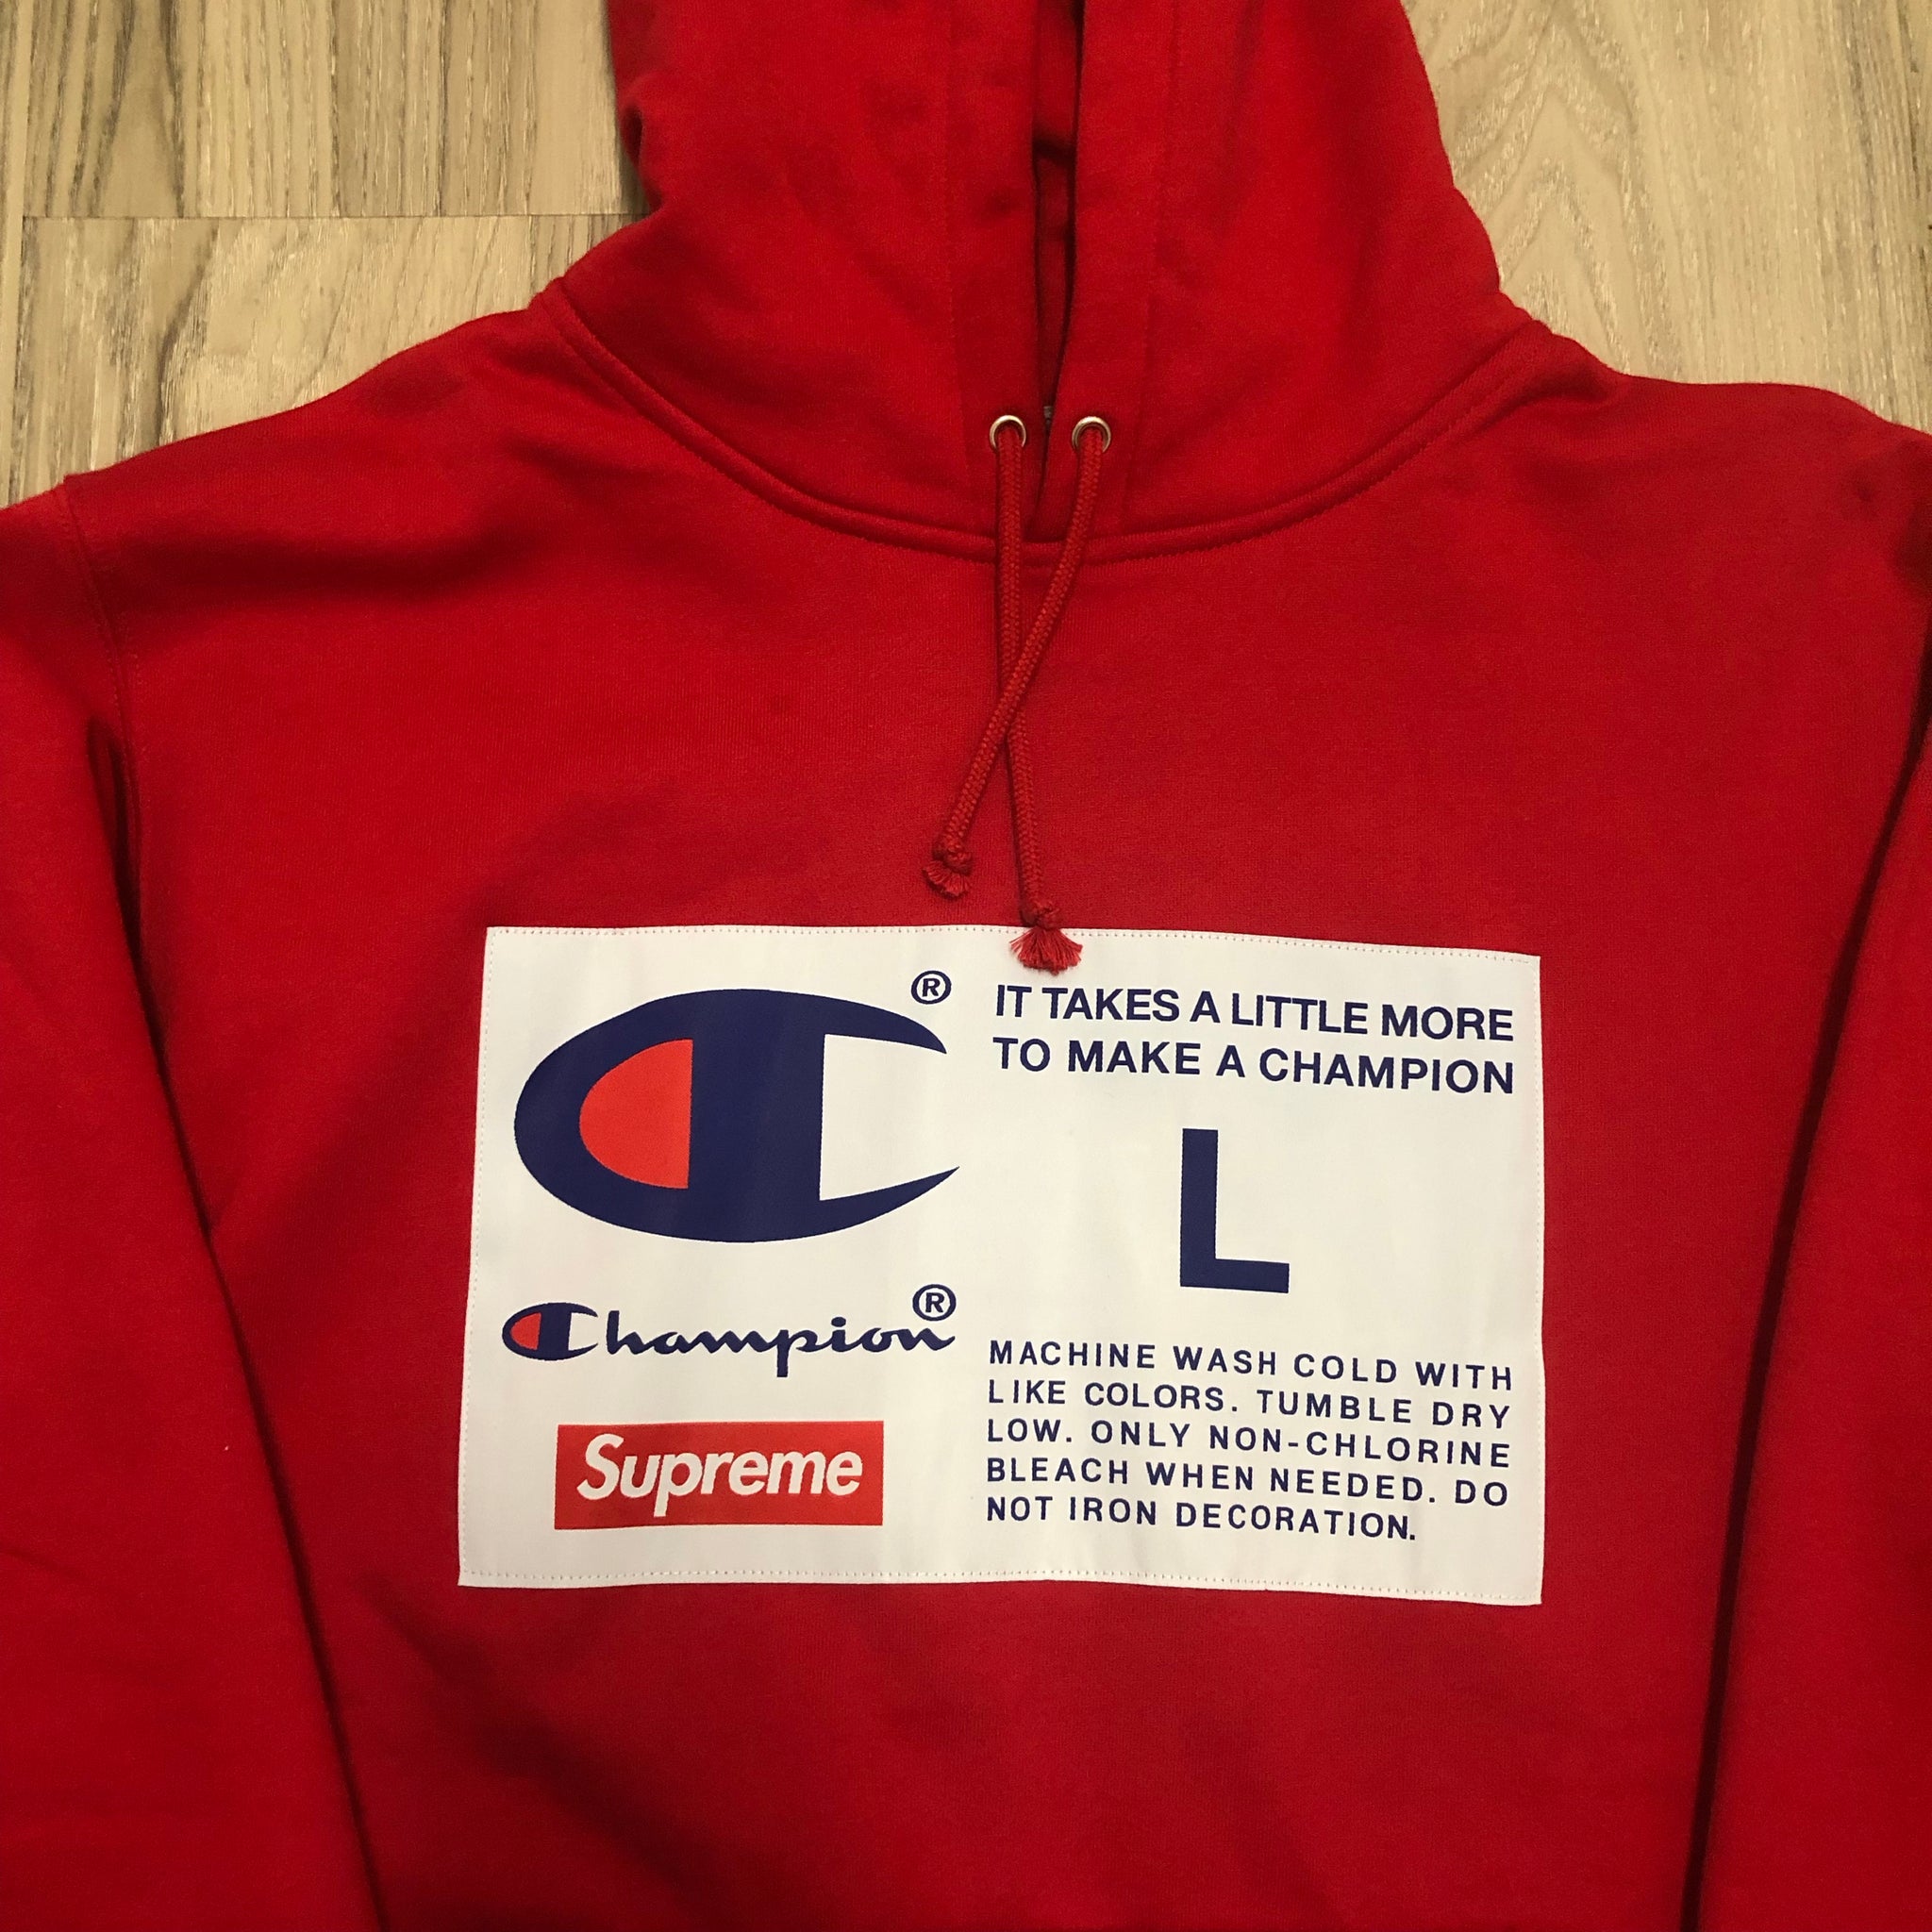 Supreme Label Sweatshirt